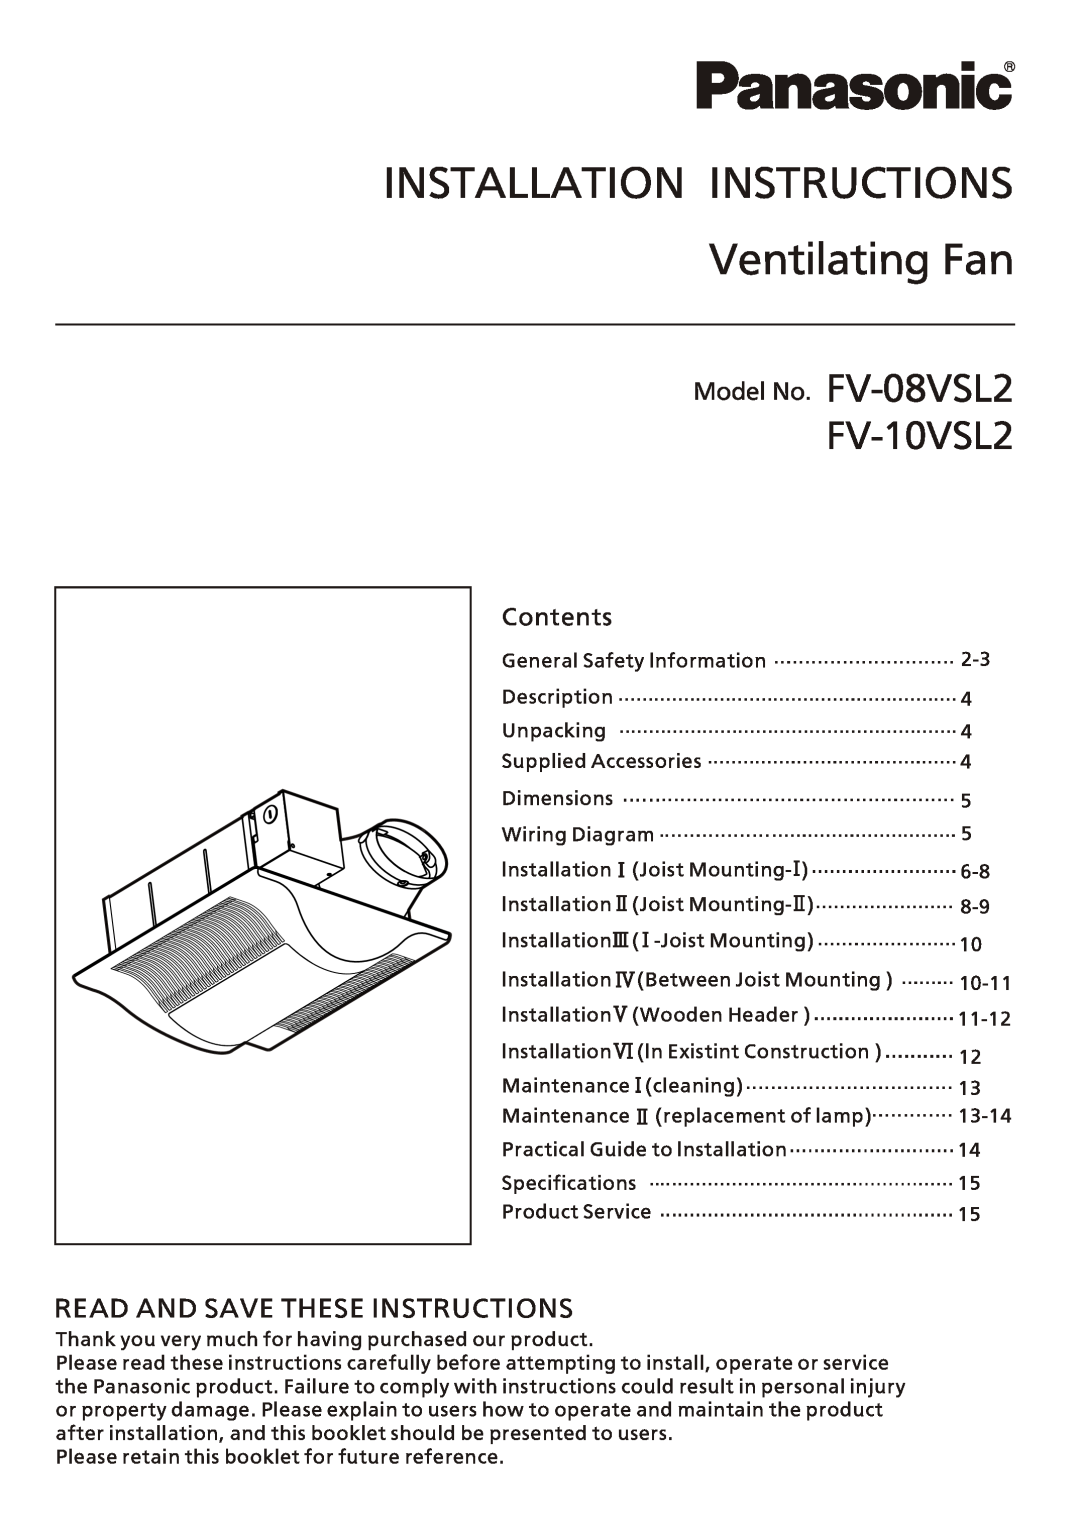 Panasonic service manual Whisper Value-LiteTM, North America Market FV-08VSL2 FV-10VSL2, Contents, Parts Identification 